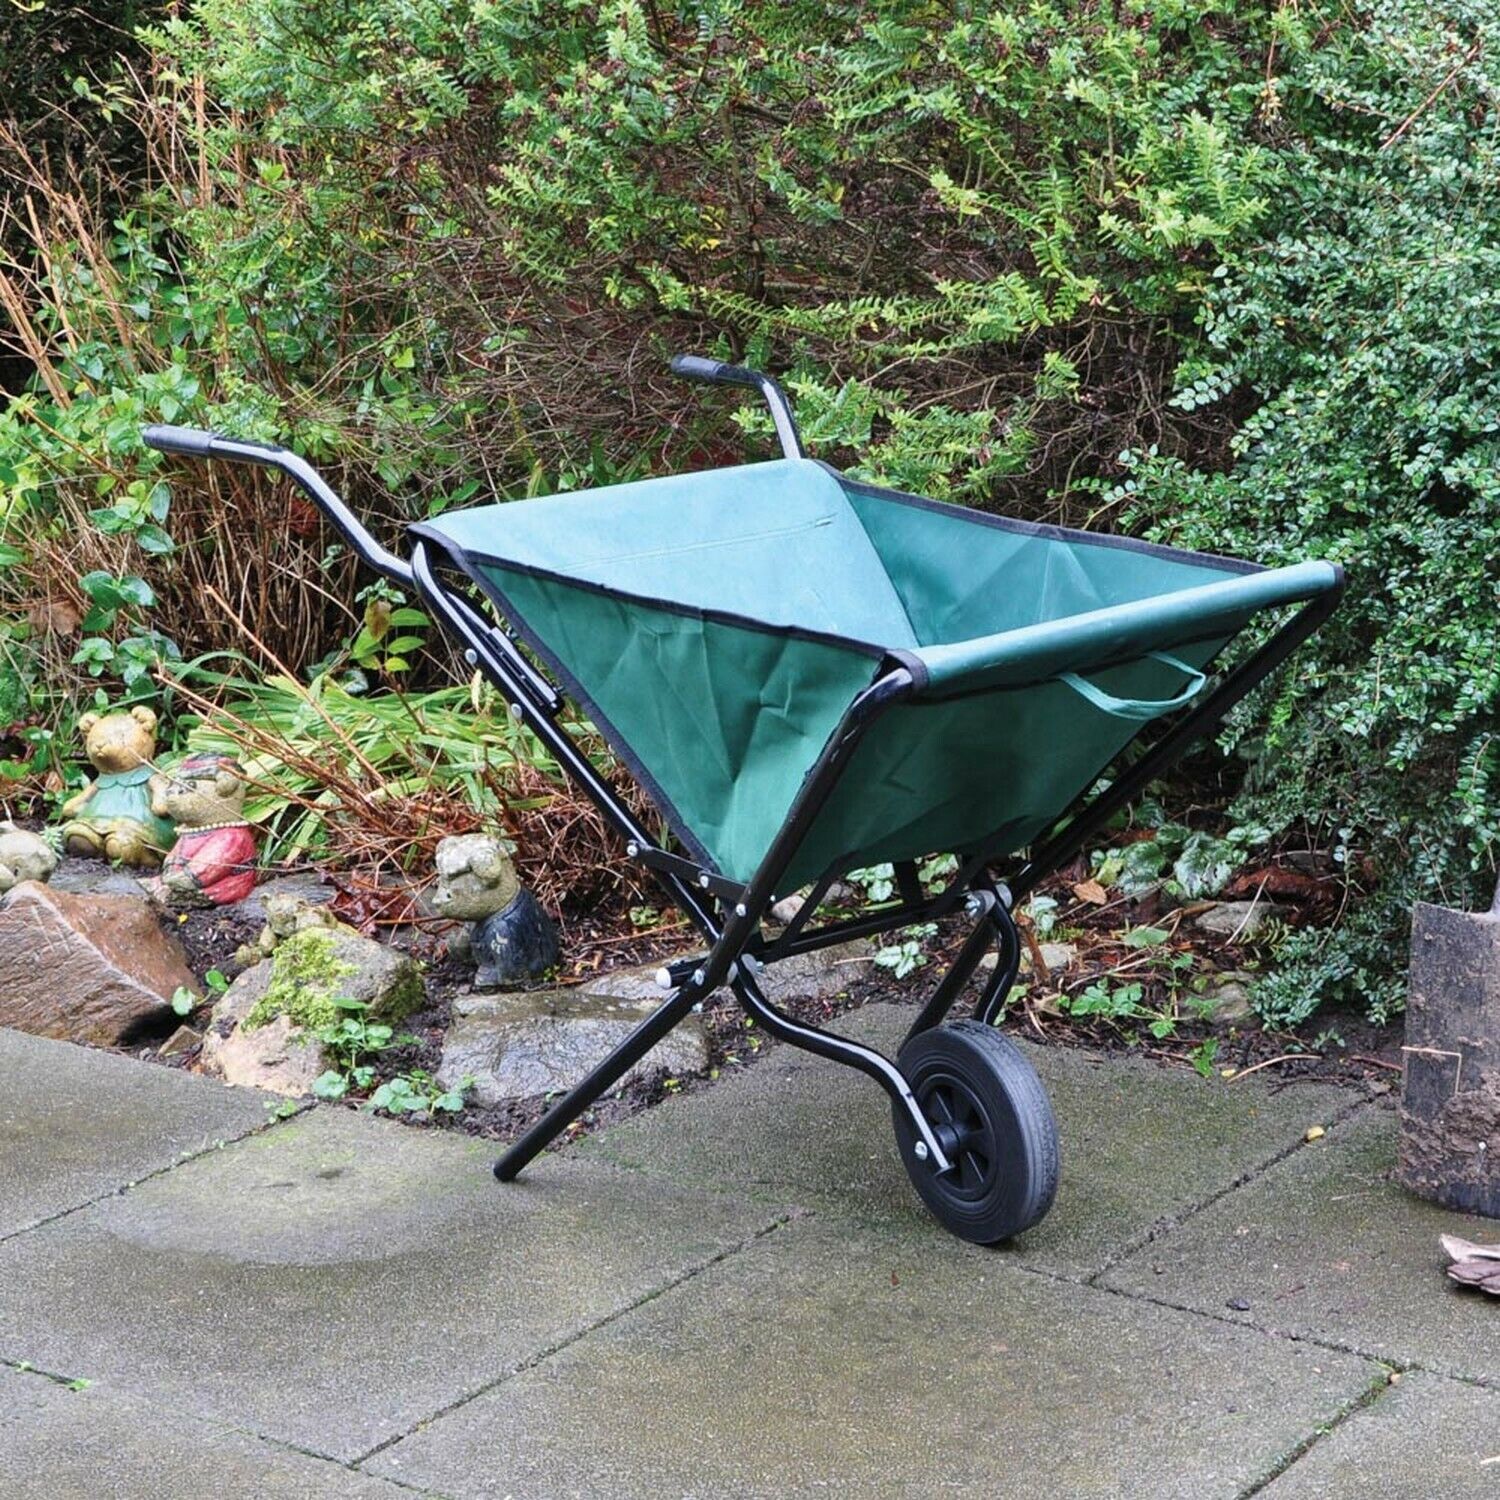 Kingfisher Garden Fold Up Wheel Barrow Garden Push Cart Outdoor Handcart Home 5399